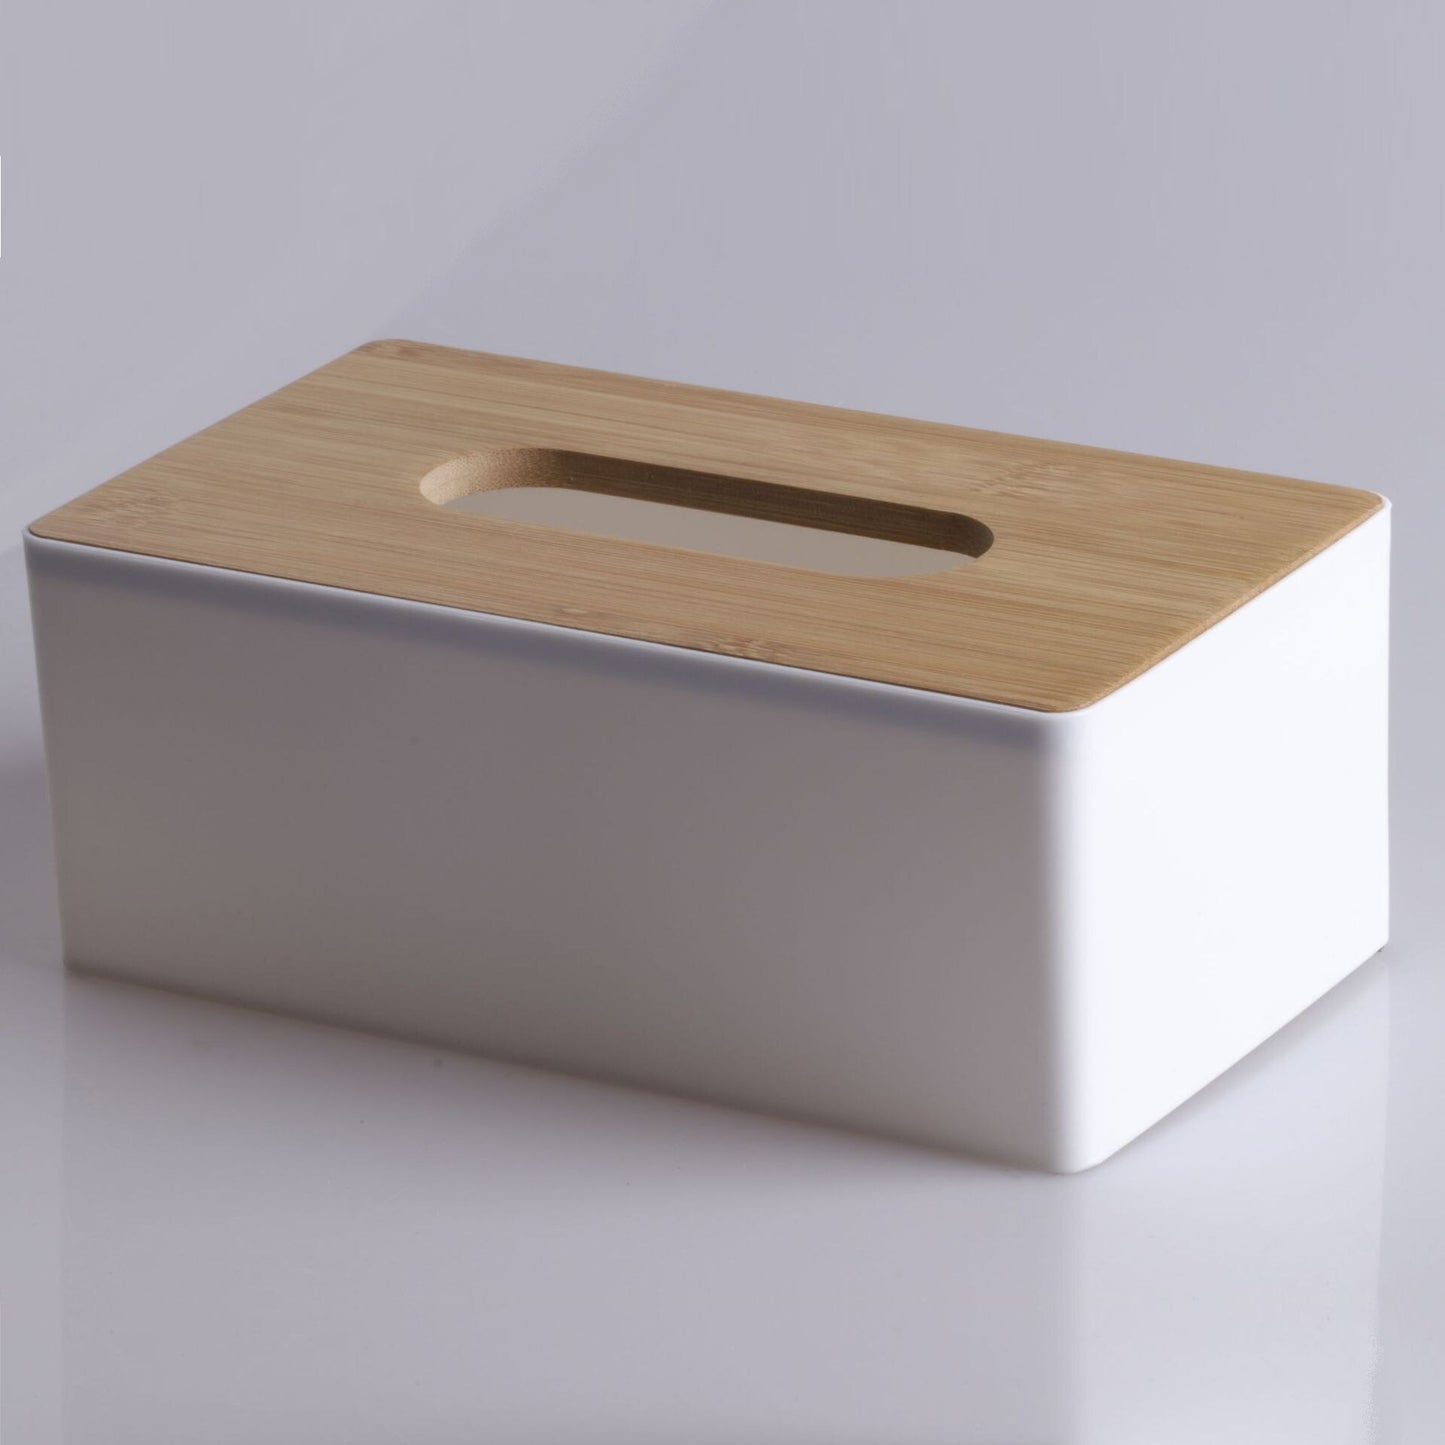 Minimalist Style Tissue Box